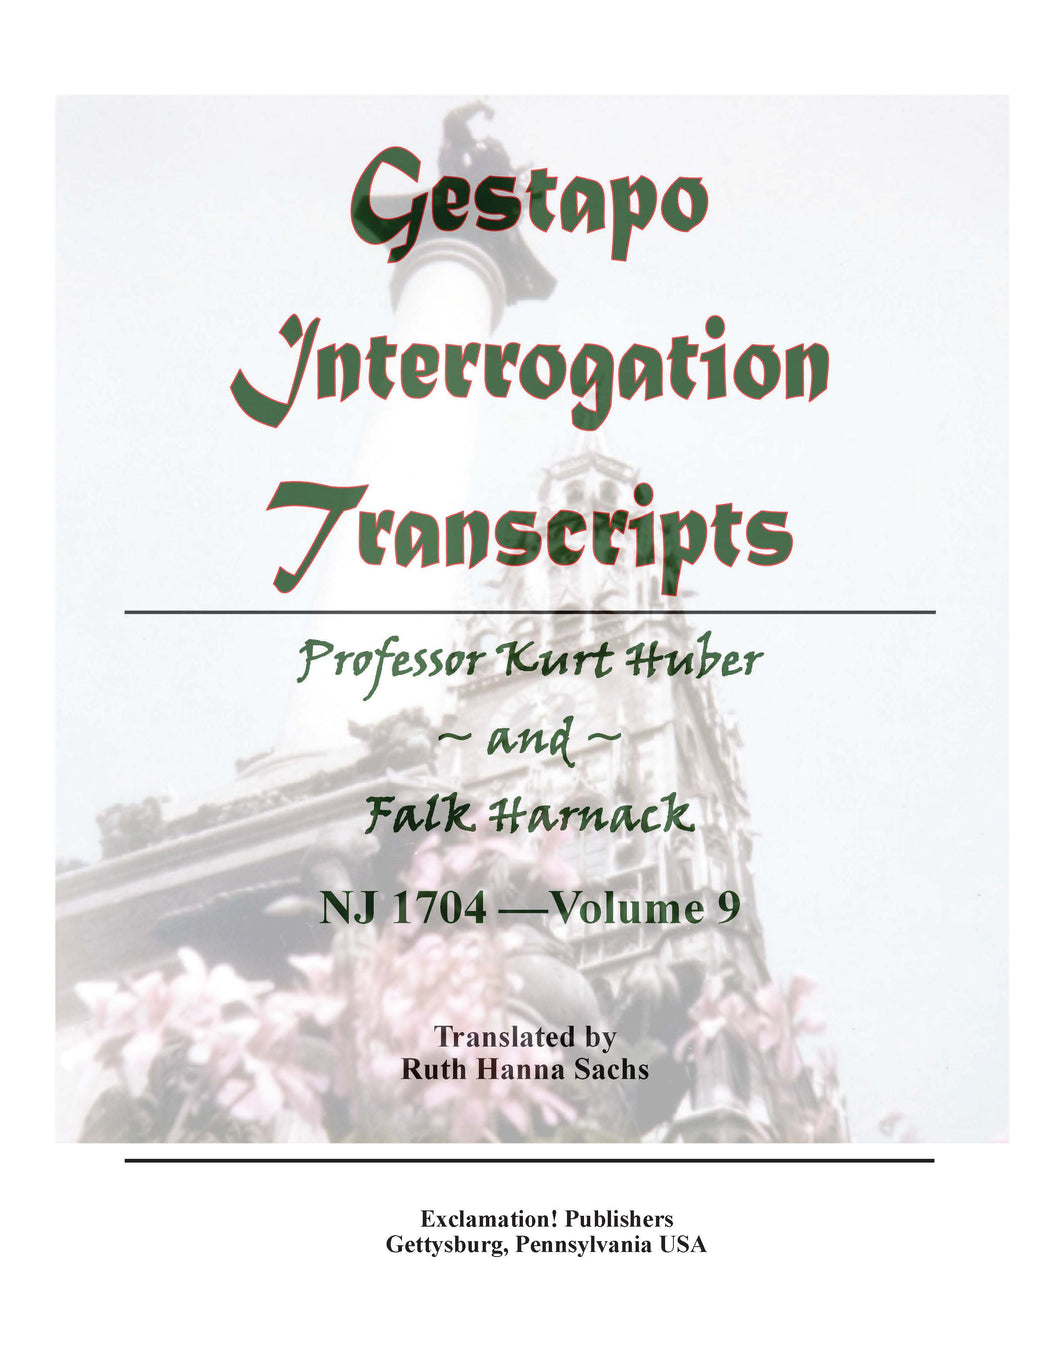 Gestapo Interrogation Transcripts: Huber and Harnack. NJ1704 Volume 9.